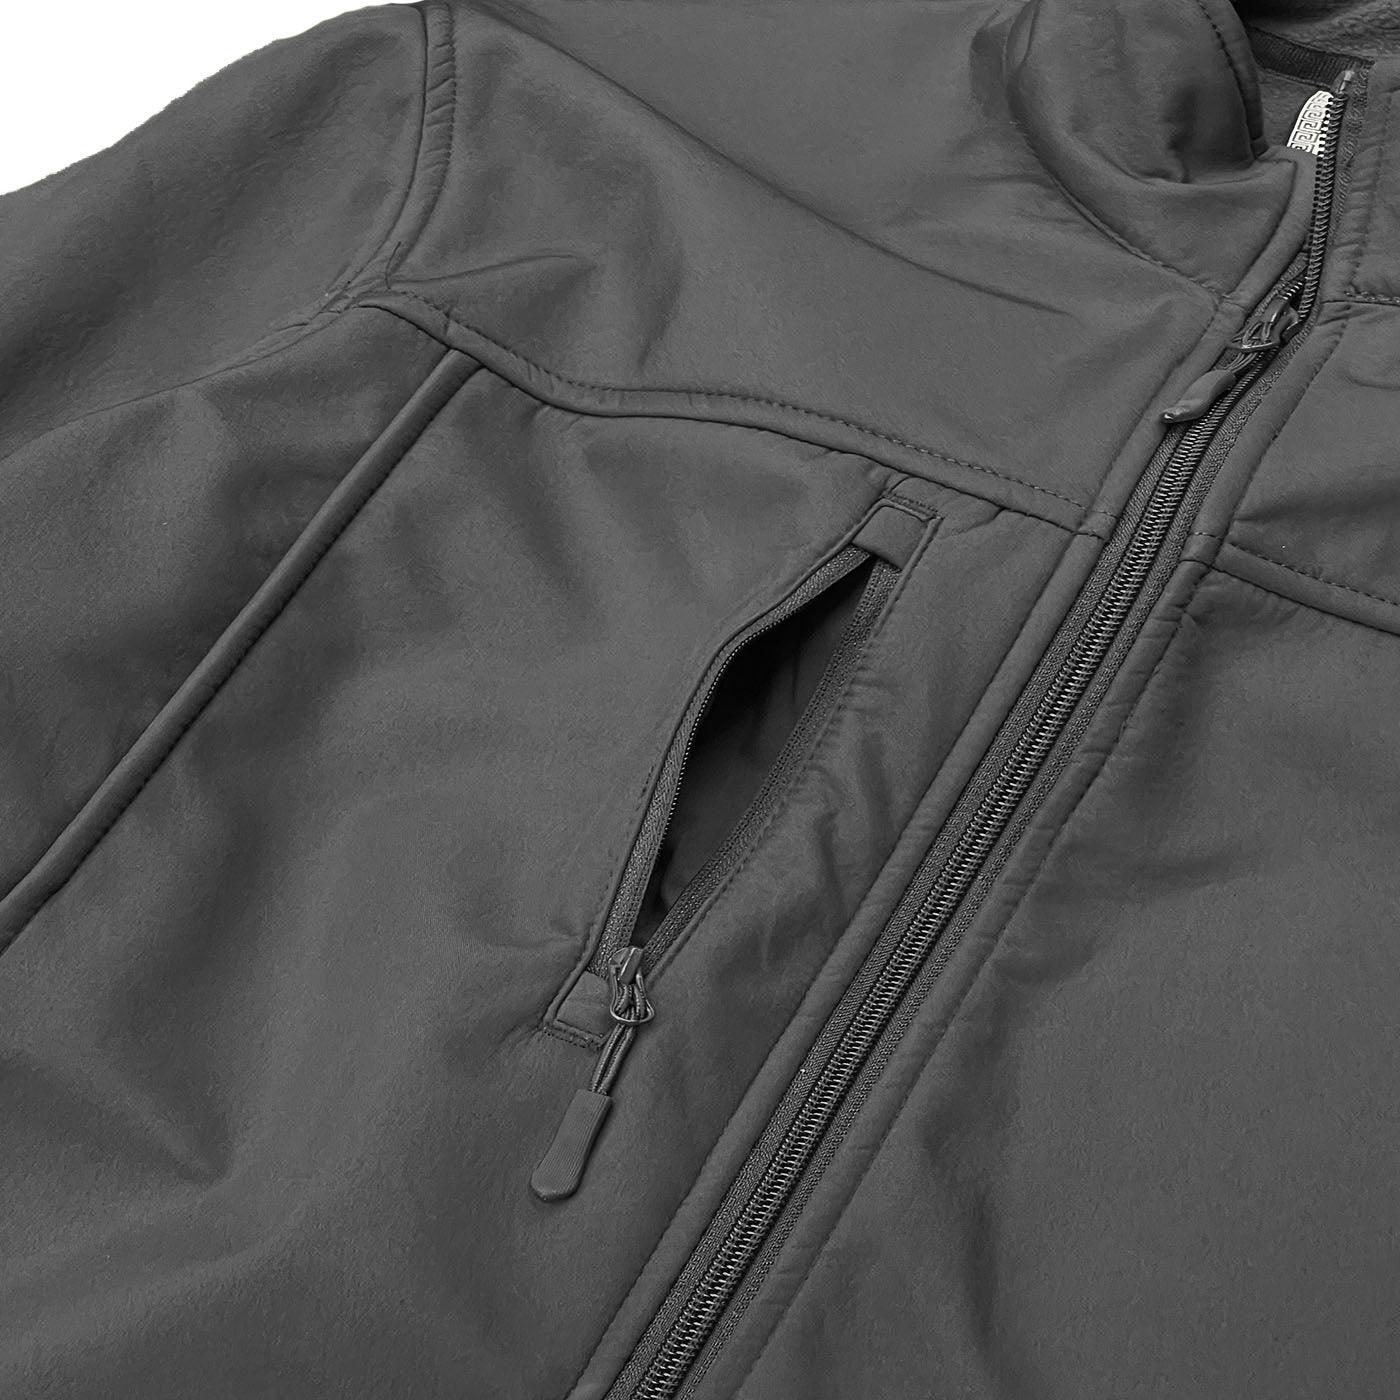 Men's Jackets Dark Grey Storm Windbreaker Jacket